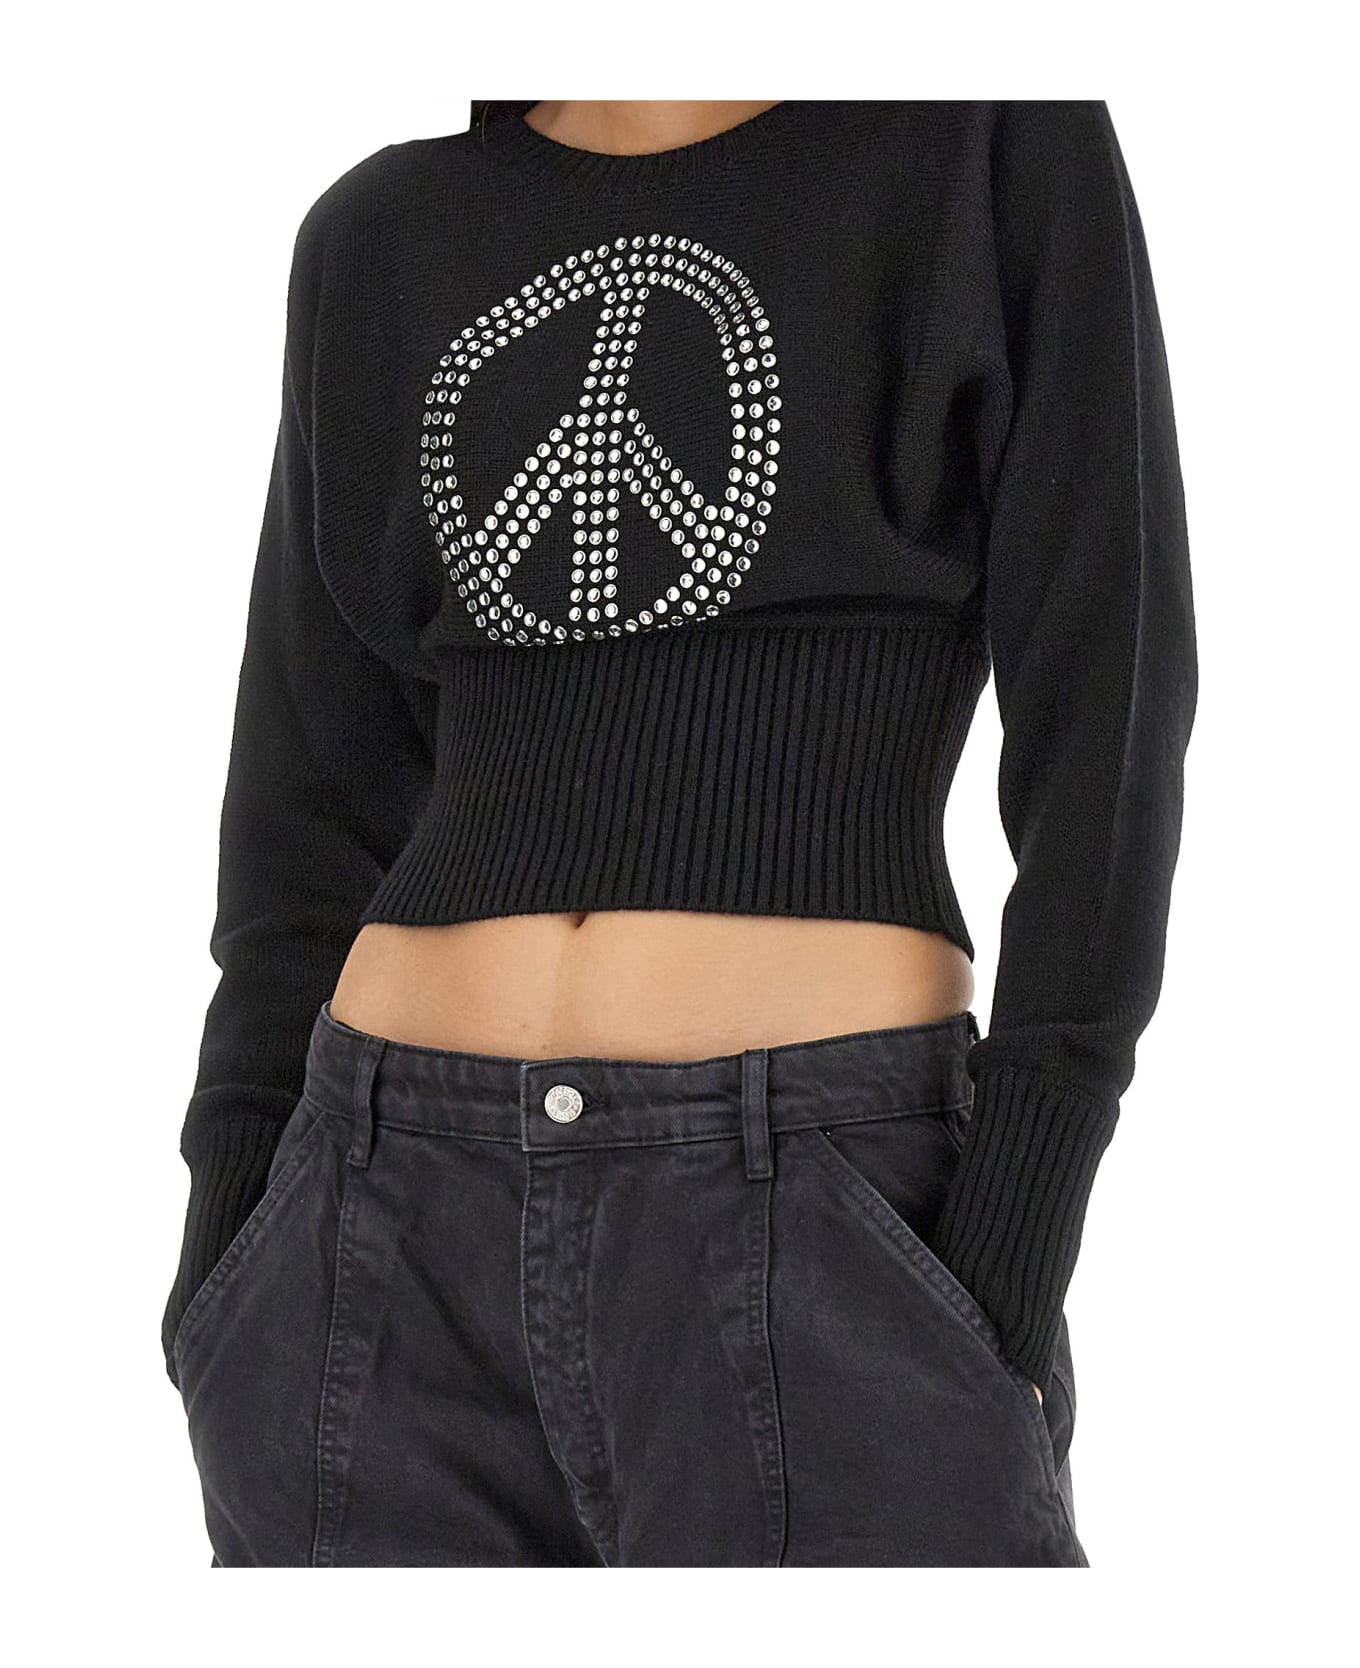 M05CH1N0 Jeans Peace Symbol Jersey - BLACK